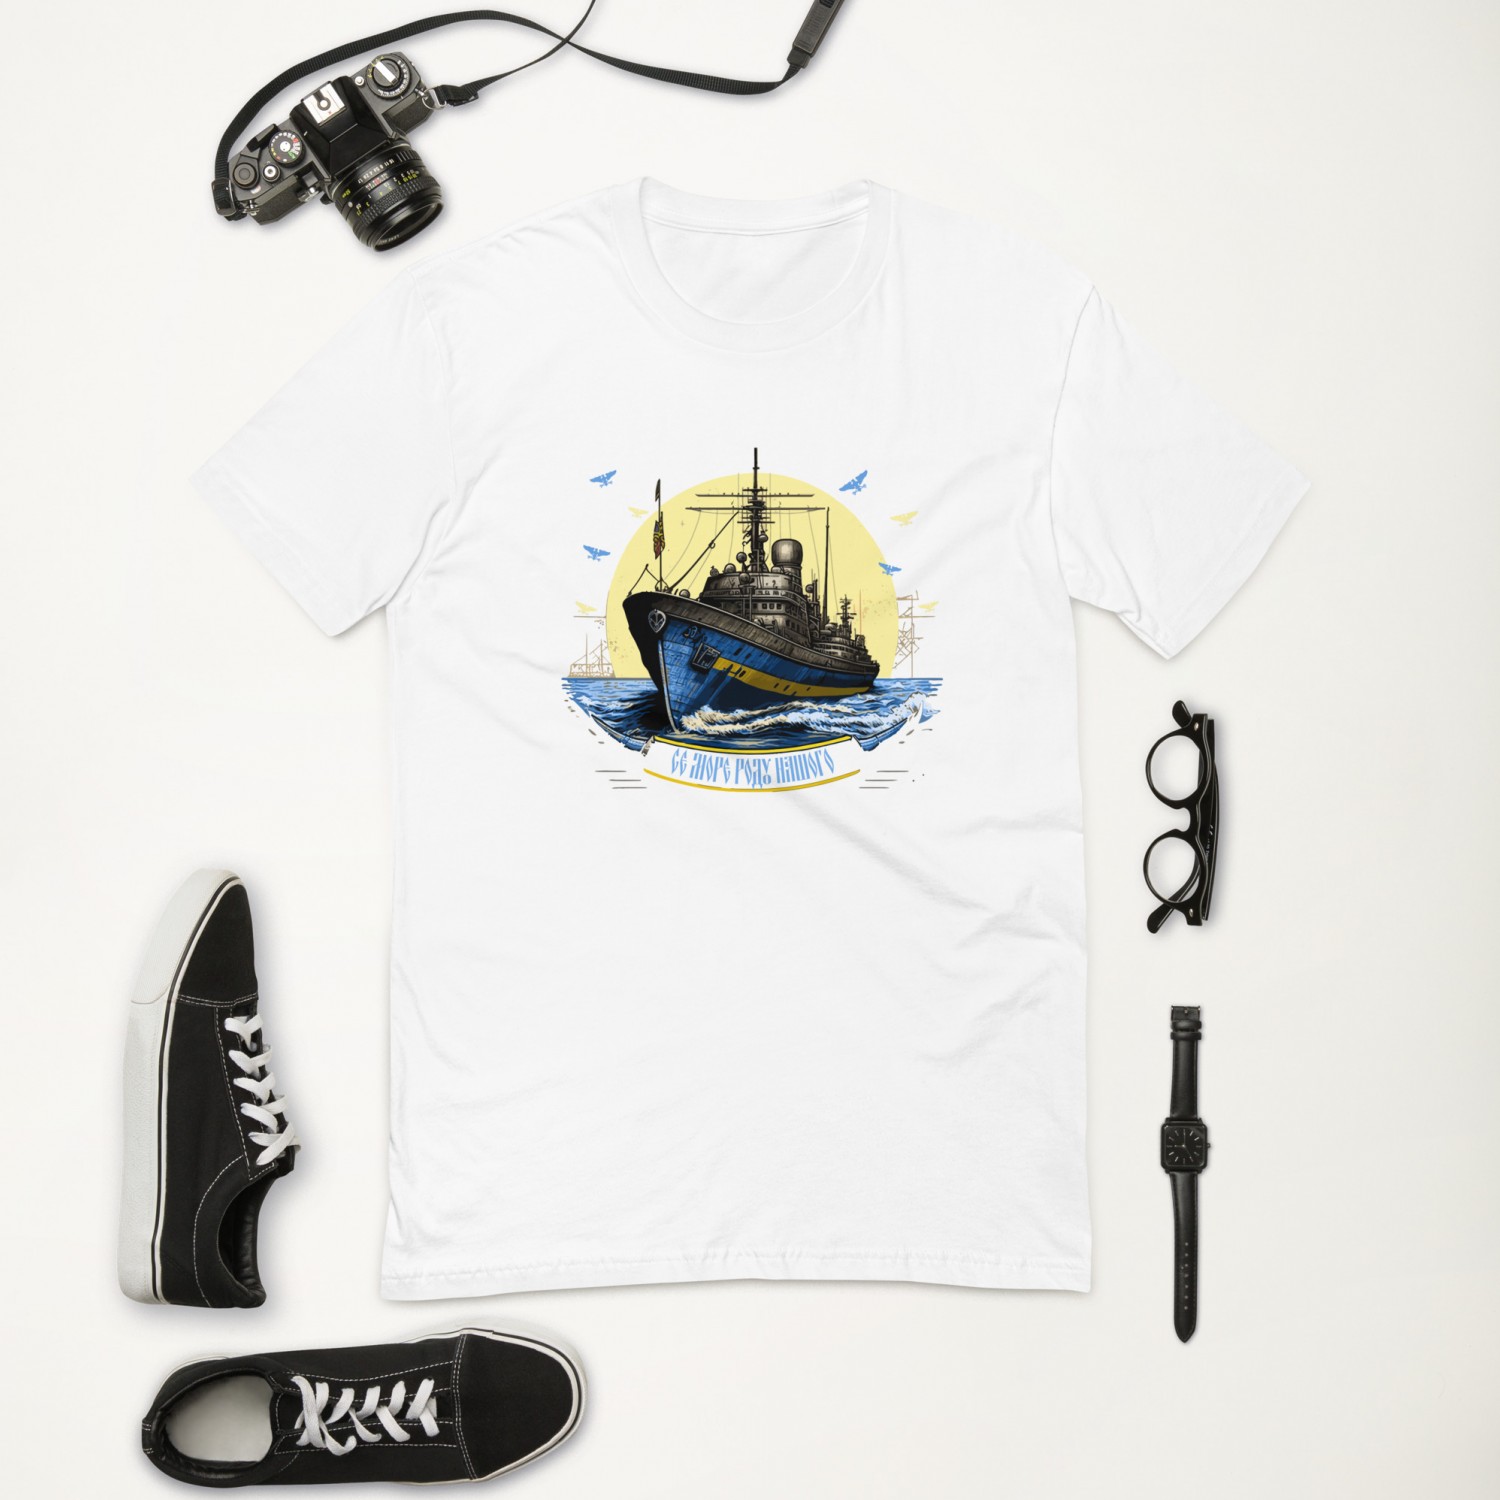 Купить футболку з Кораблем та морем